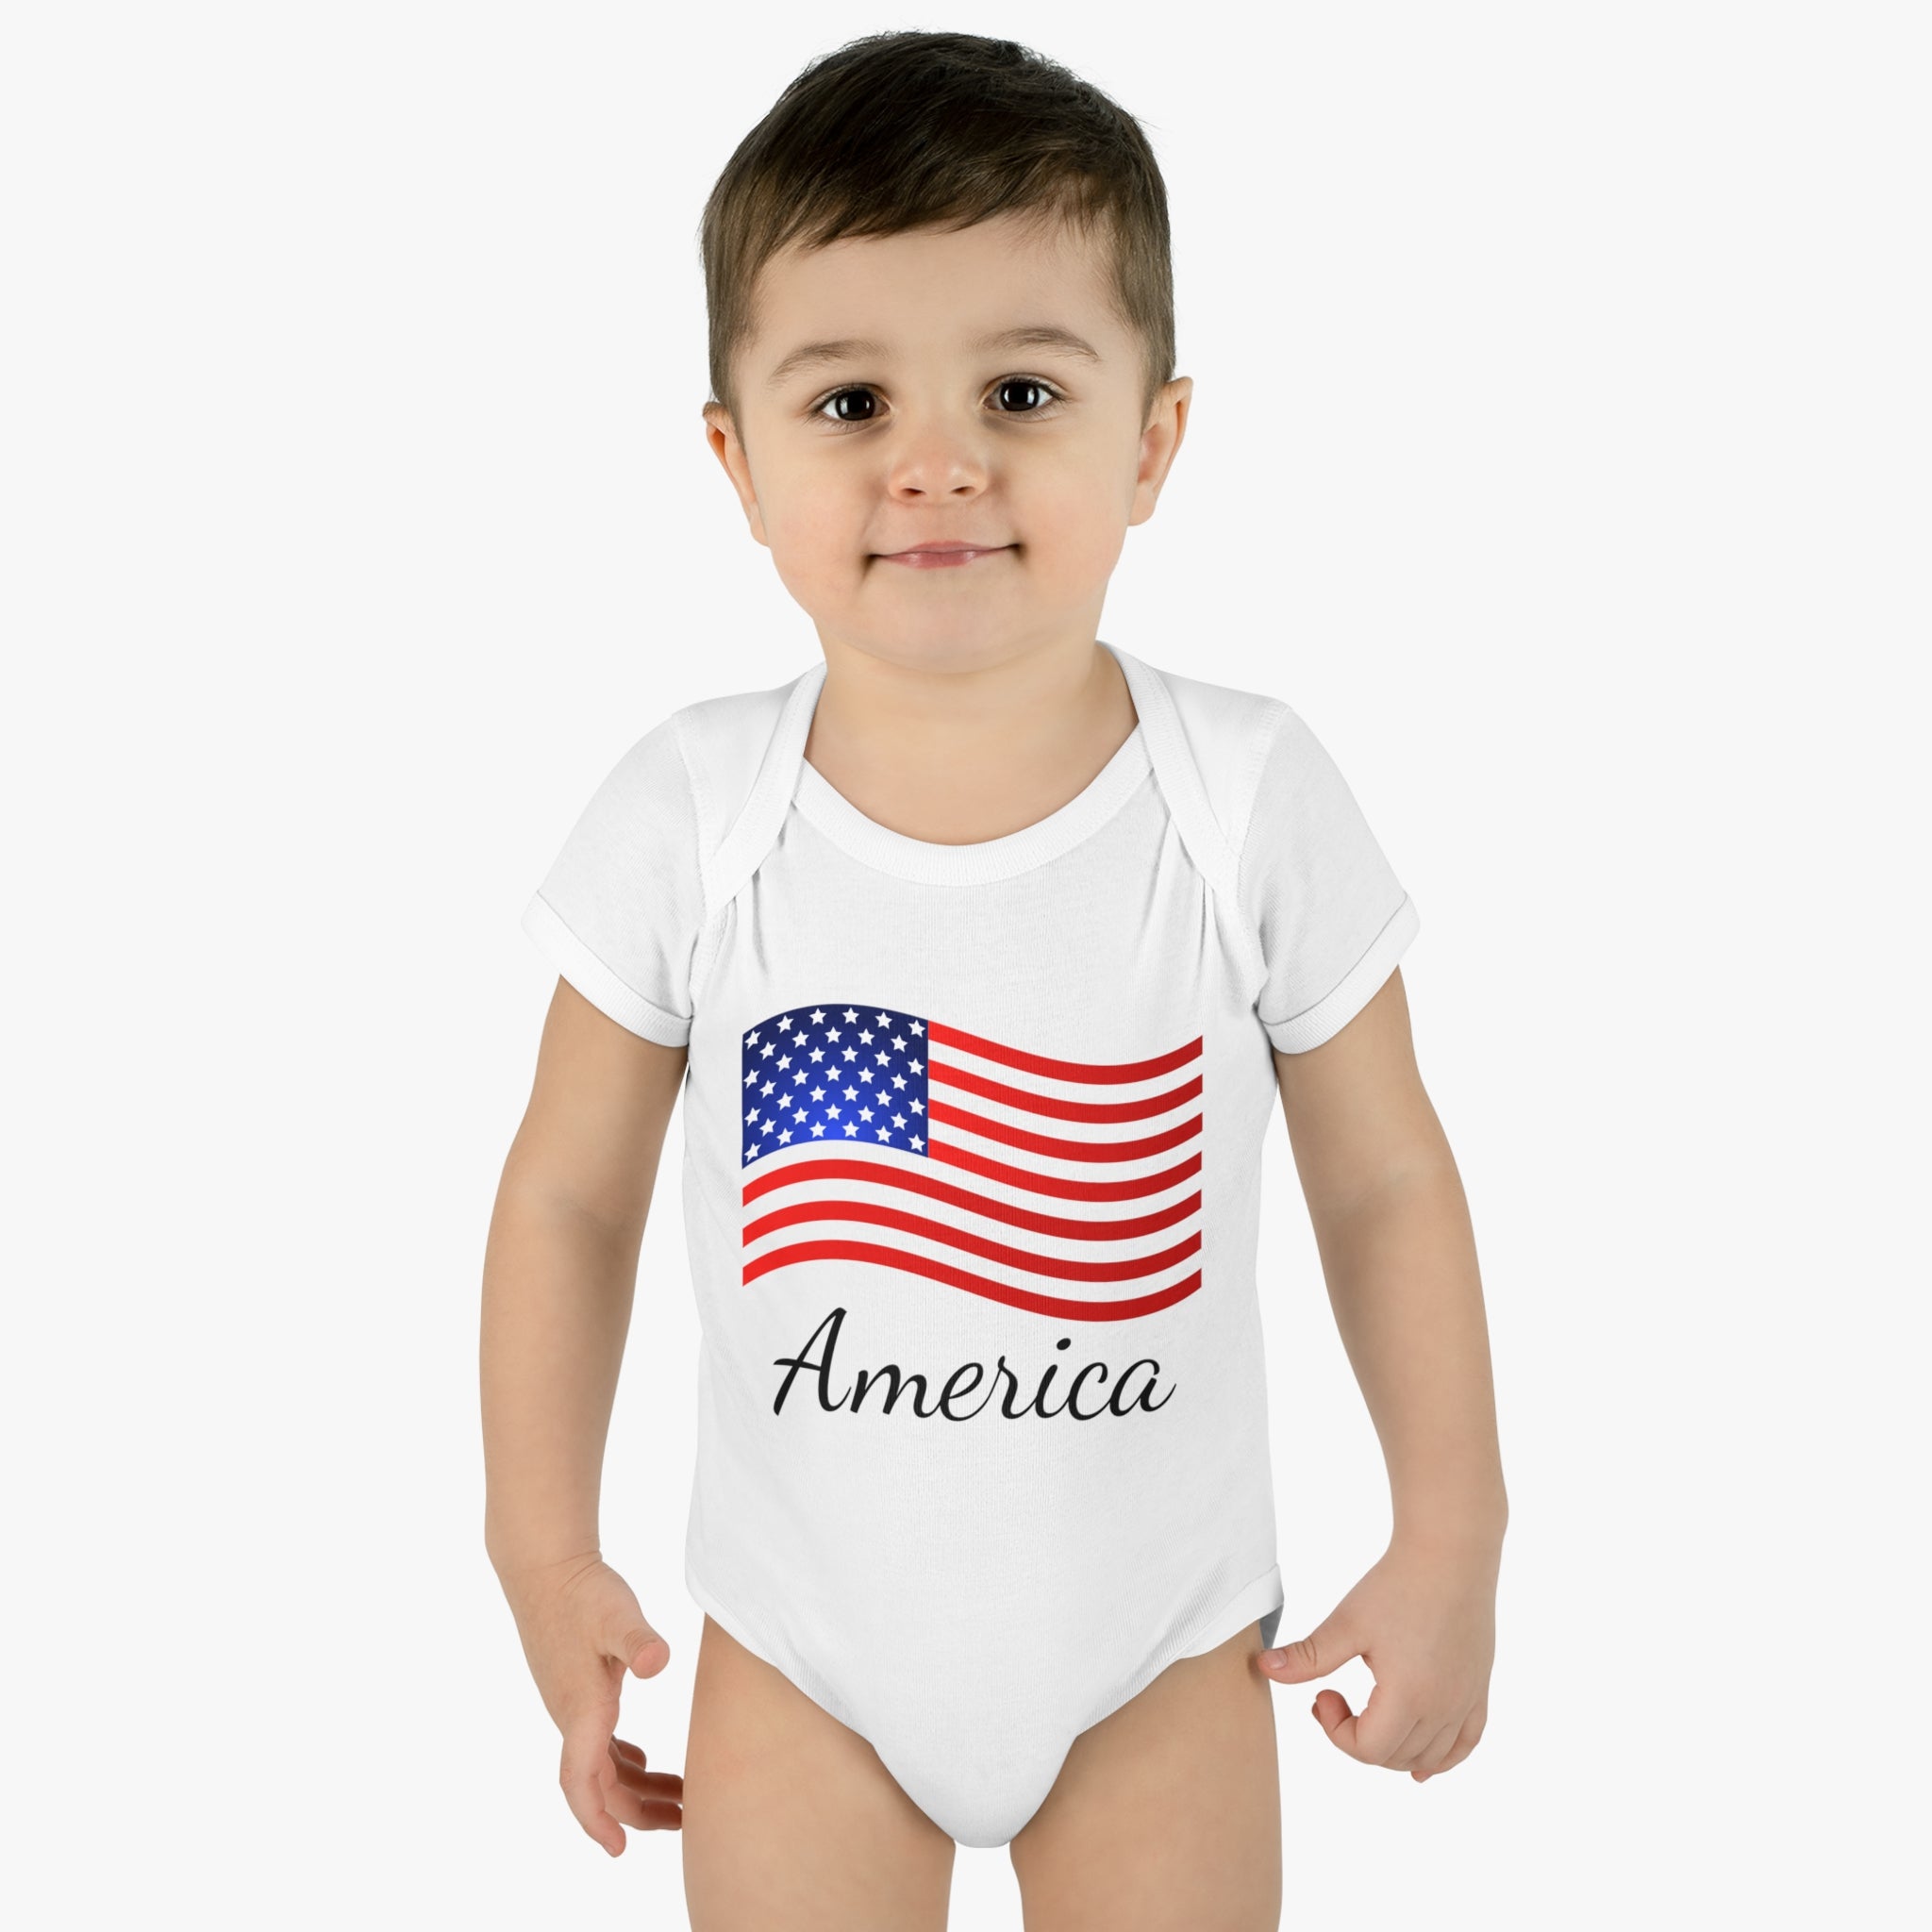 America American Flag Baby Bodysuit